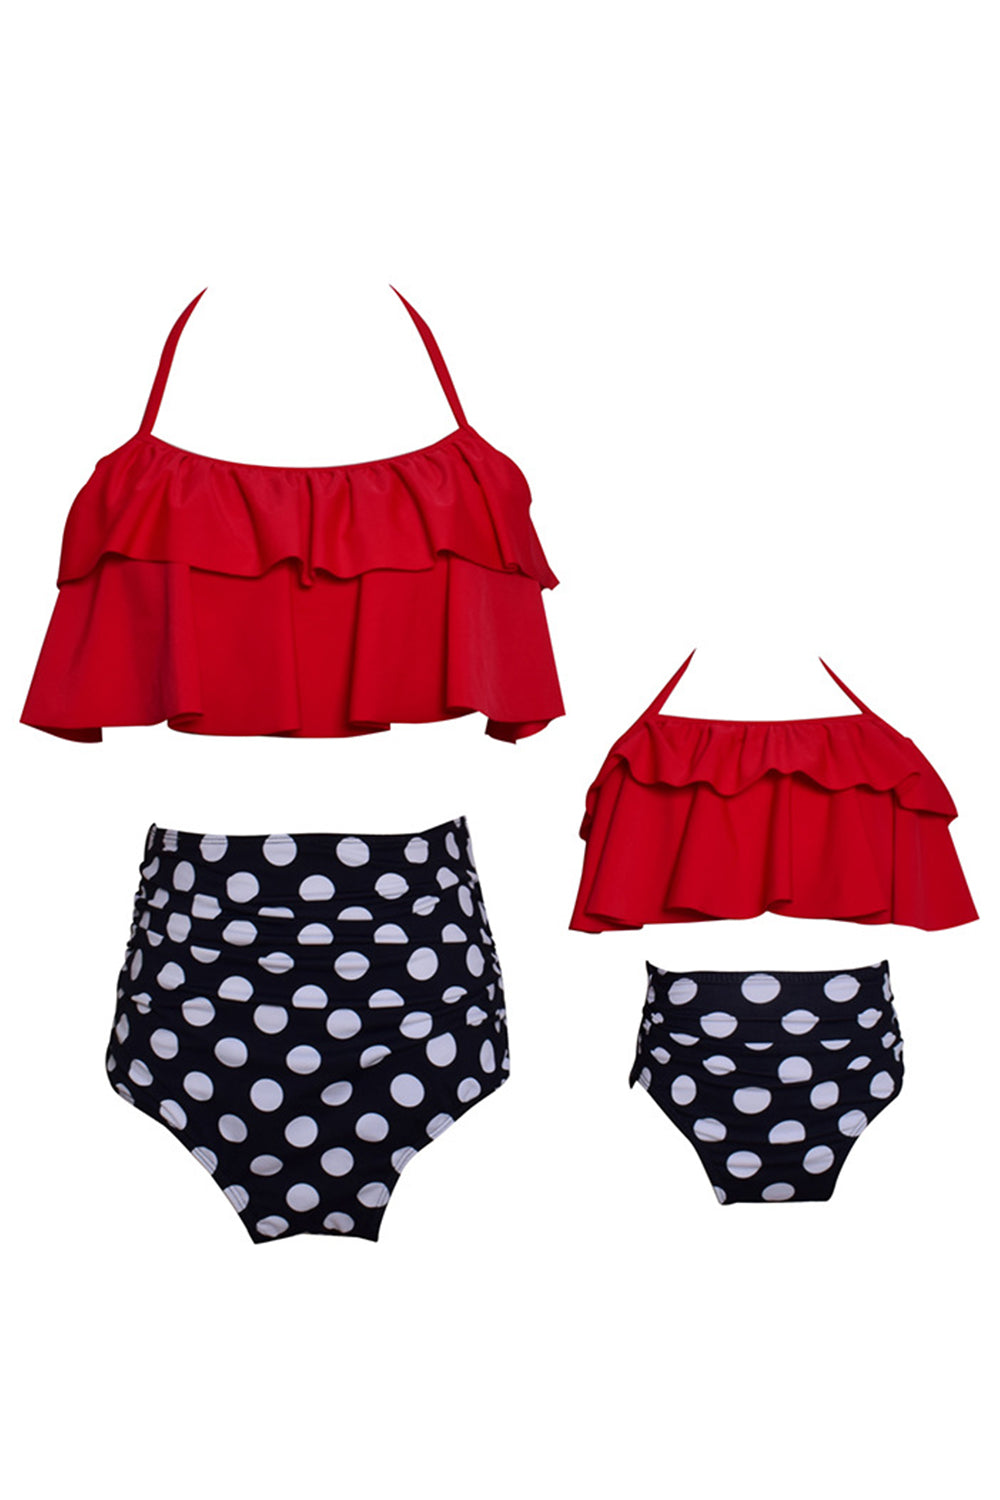 Iyasson Polka Dot Falbala Parent-child Bikini Sets